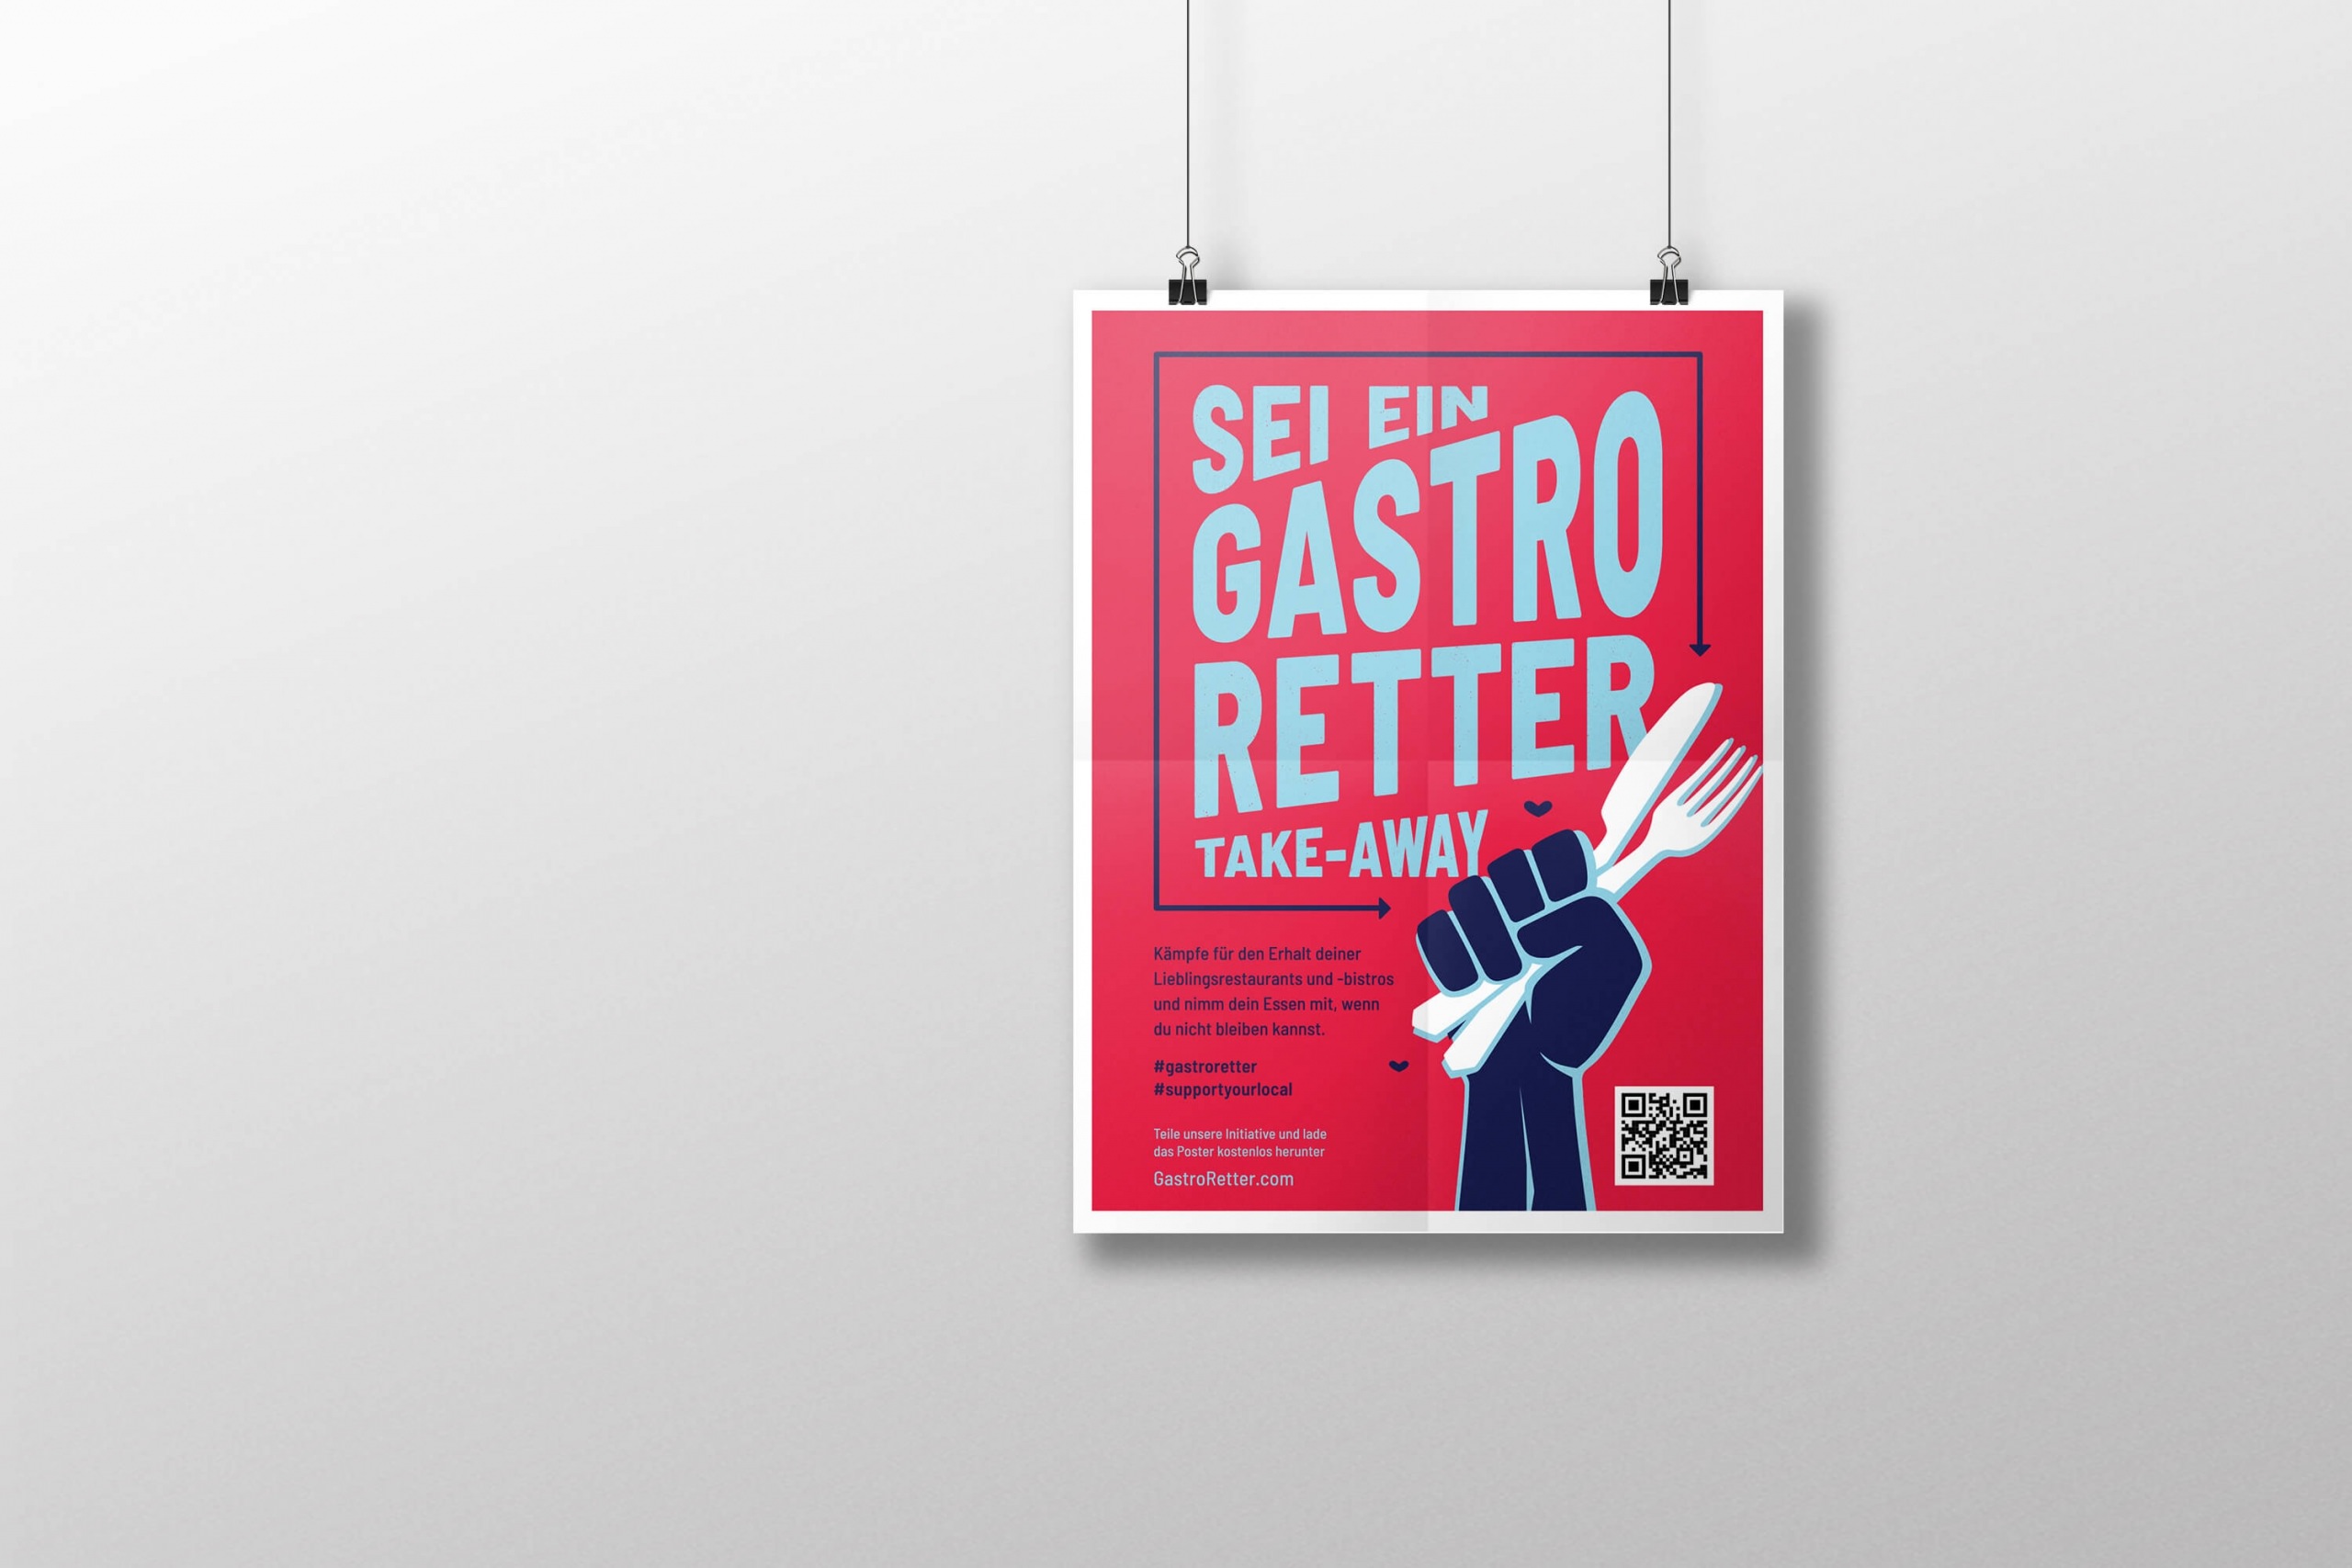 Plakat der GastroRetter-Initiative von unclassic